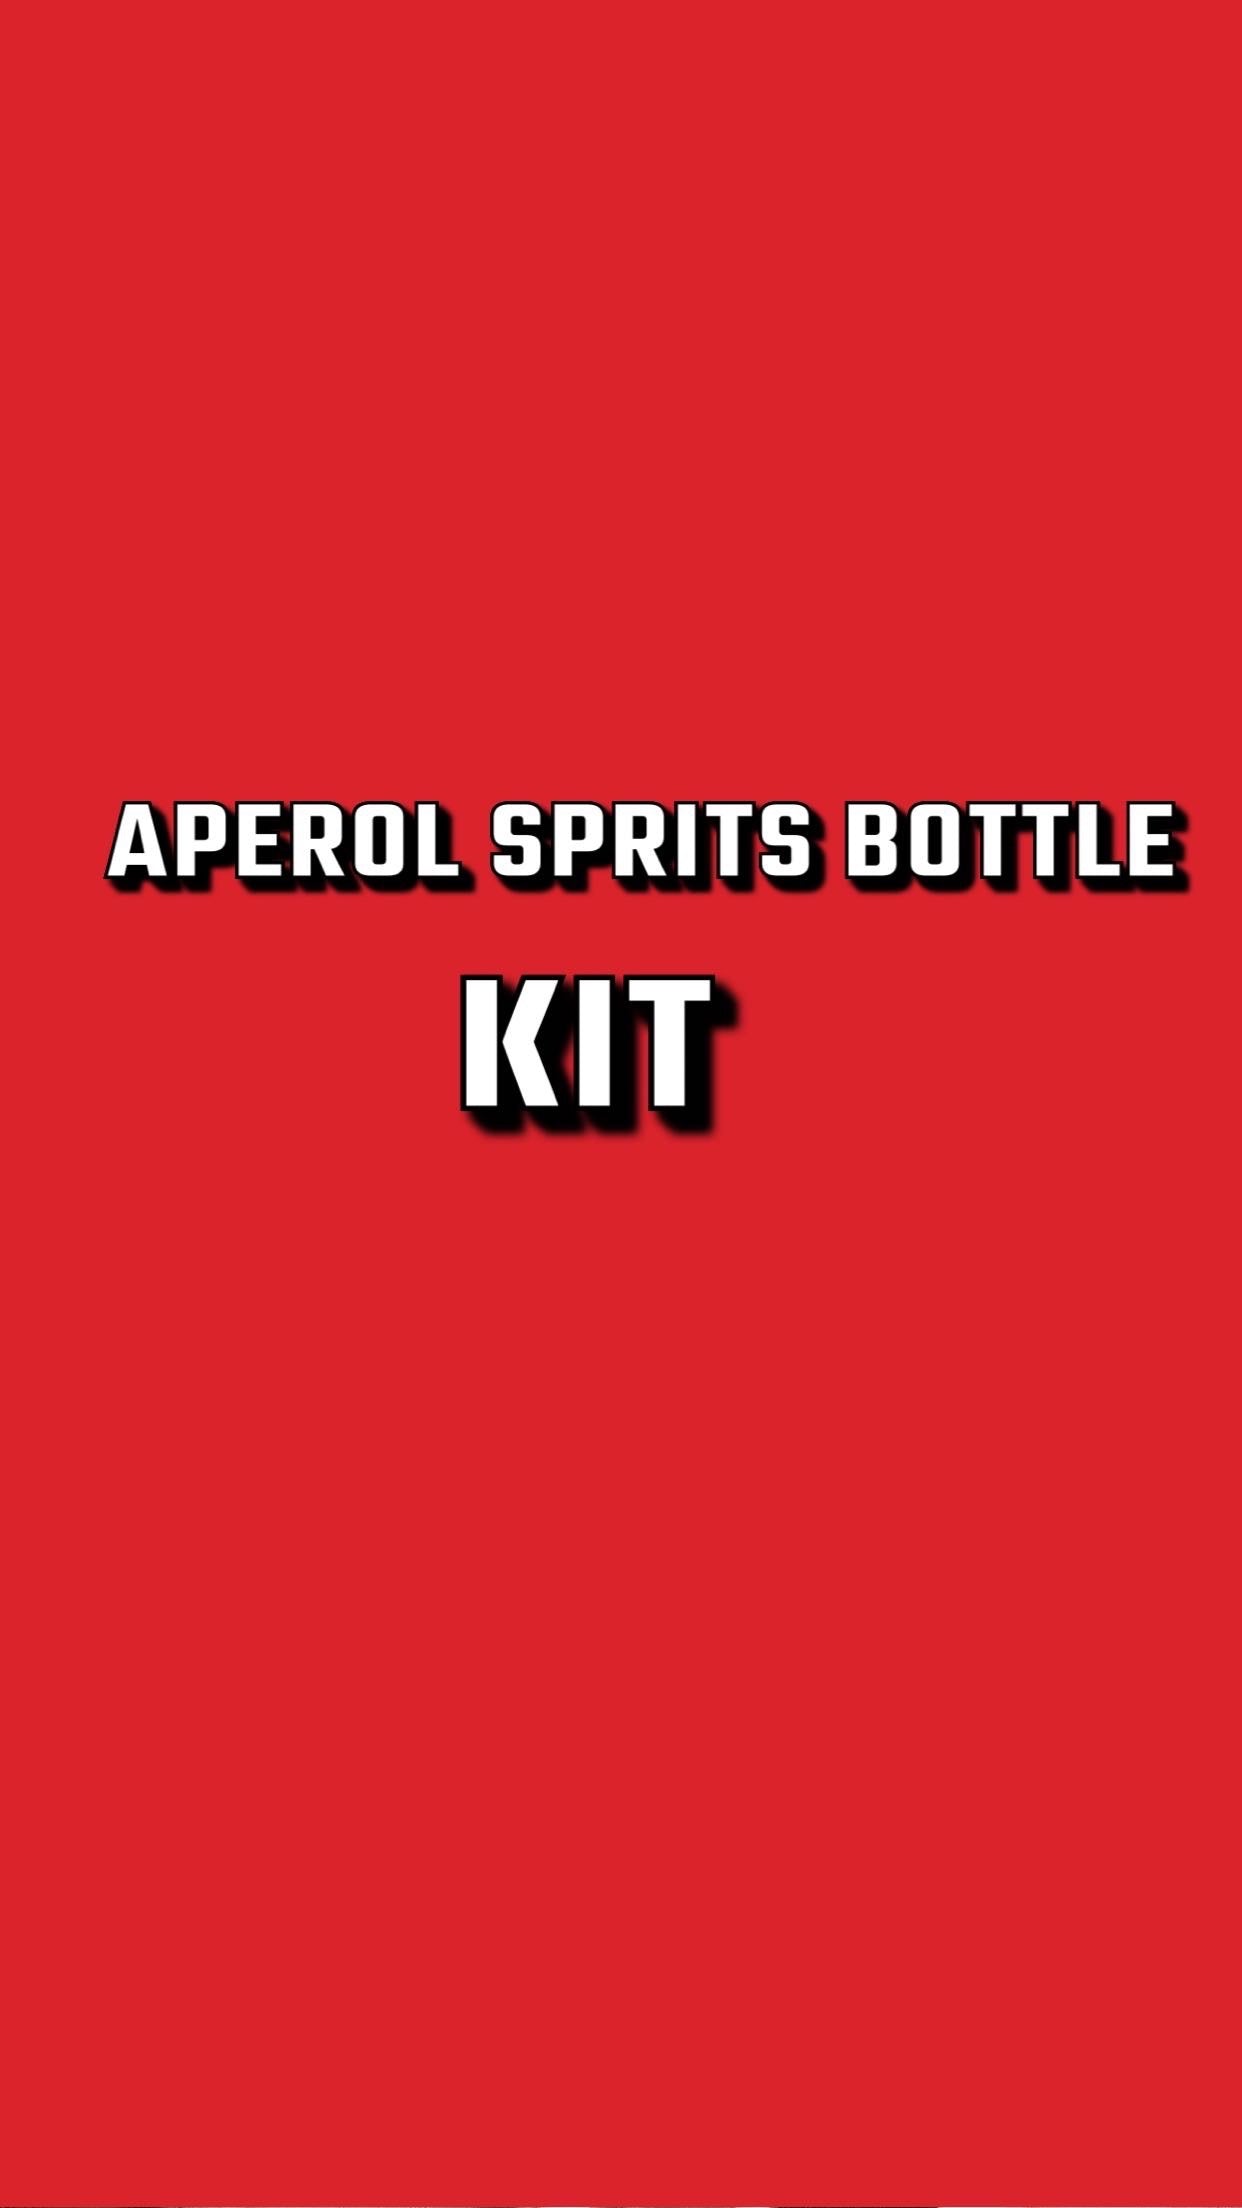 Alerol Spritz bottle kit